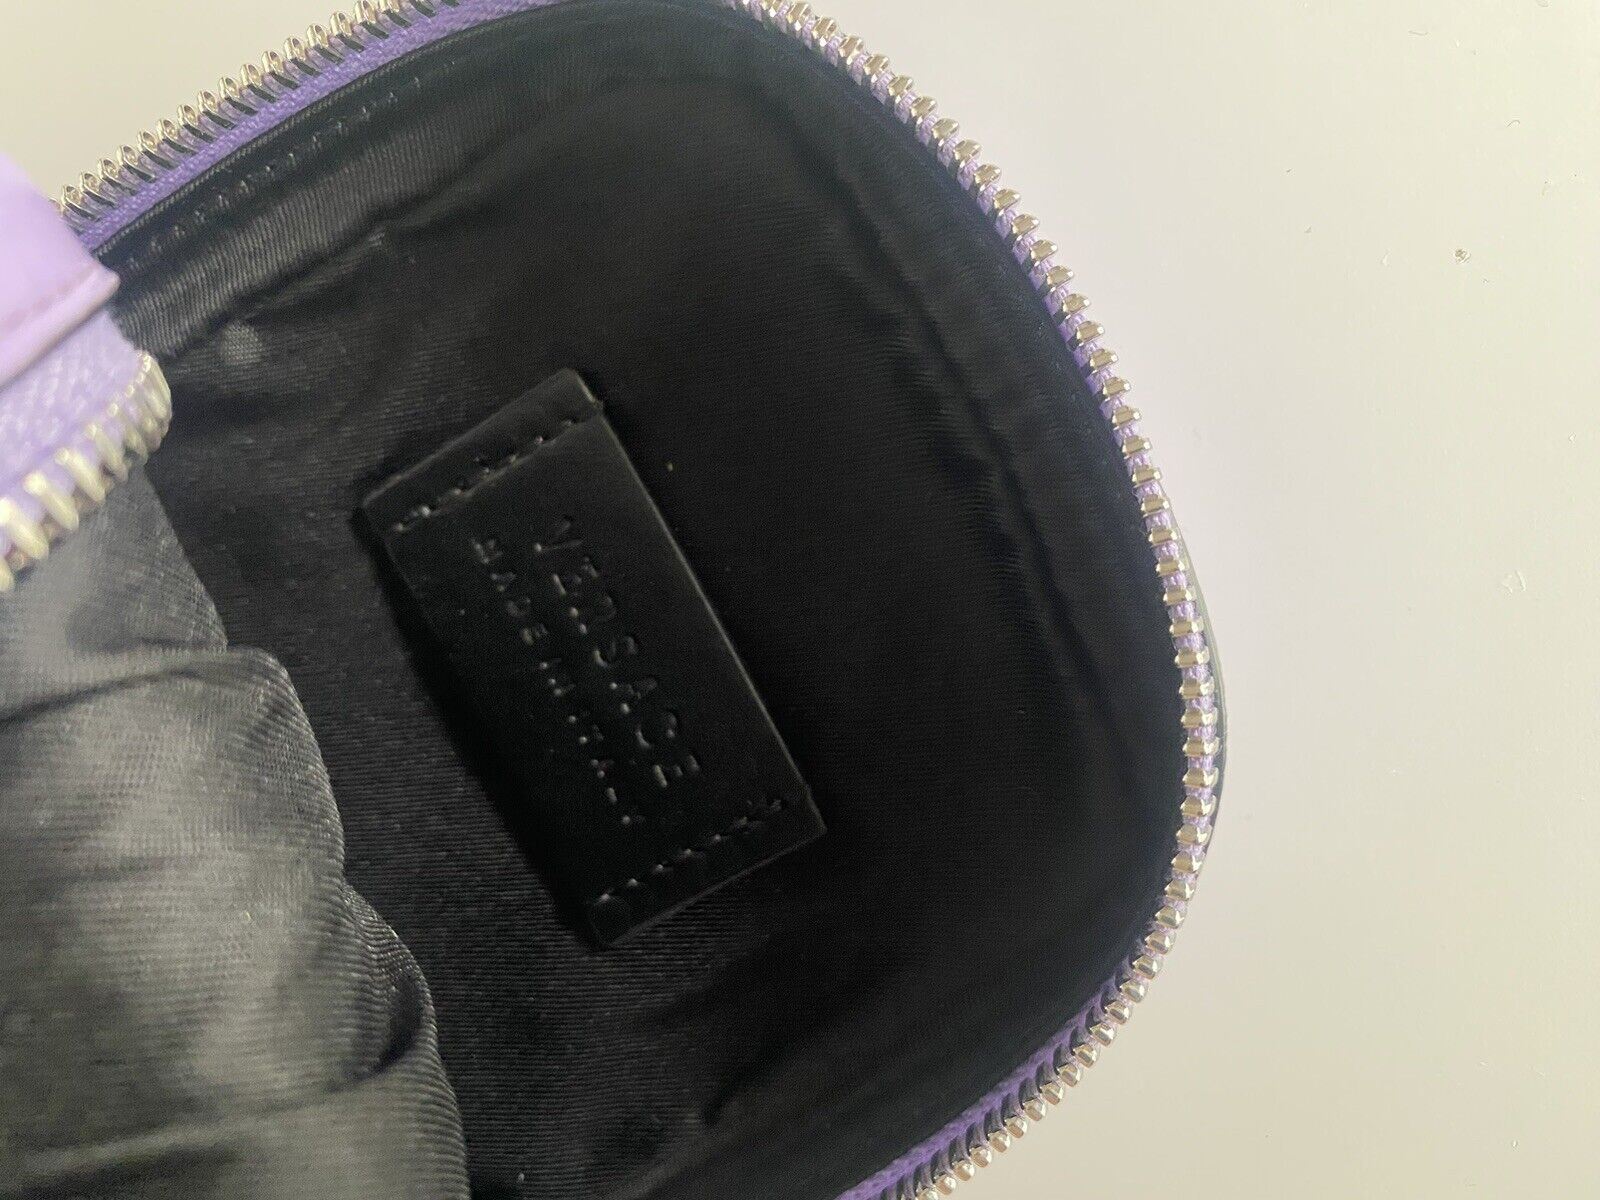 NWT Versace Leather Jacaranda Virtus Neck Pouch Crossbody Bag Italy DP88461